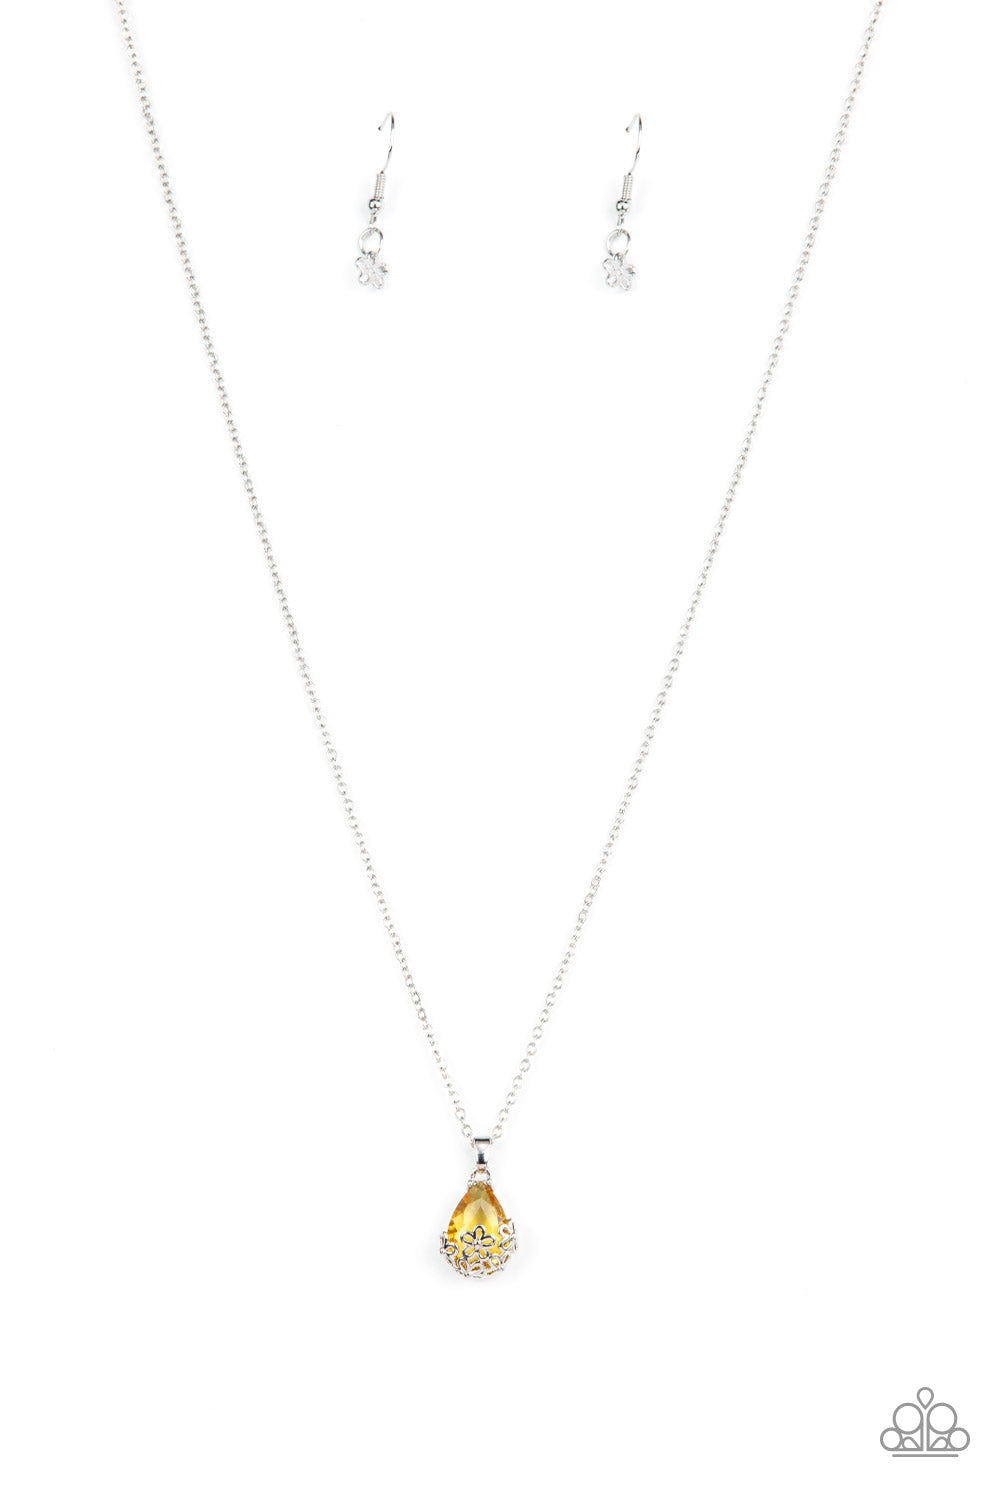 Flower Patch Fabulous - Yellow Teardrop Gem/Dainty Silver Flower Pendant Paparazzi Necklace & matching earrings